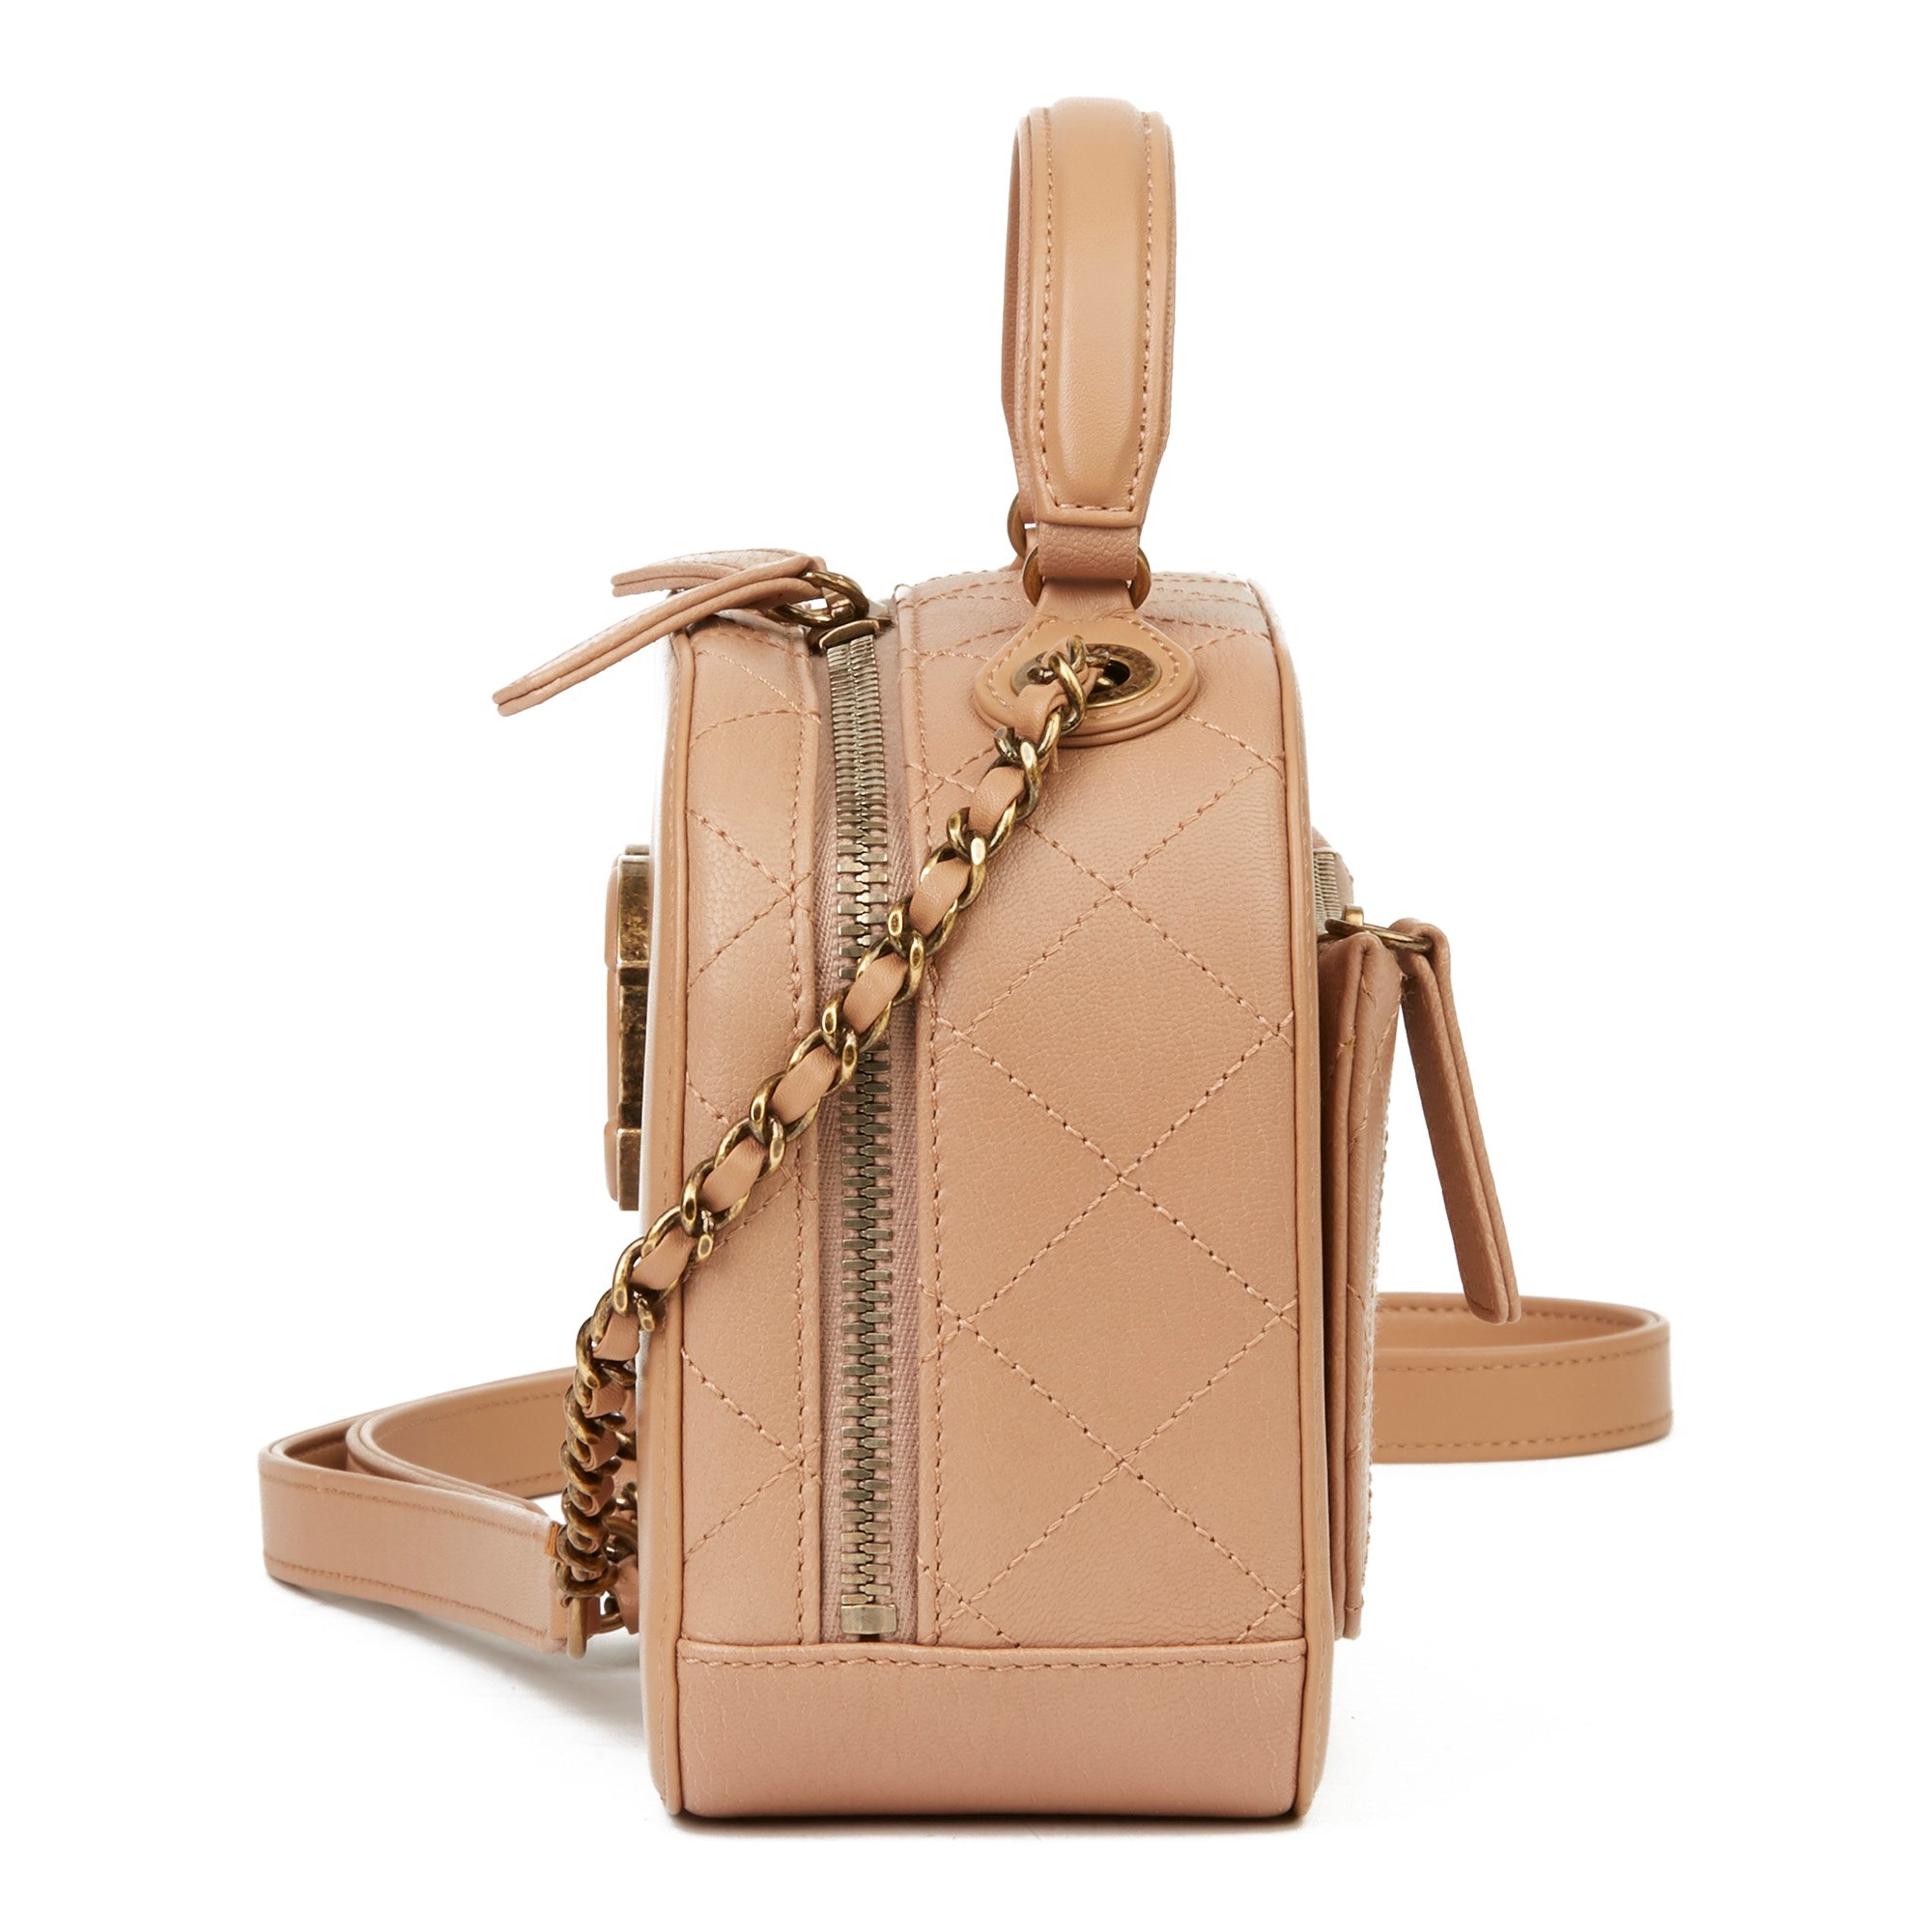 Chanel Small Coco Curve Vanity Bag 2017 HB3610 | Second Hand Handbags